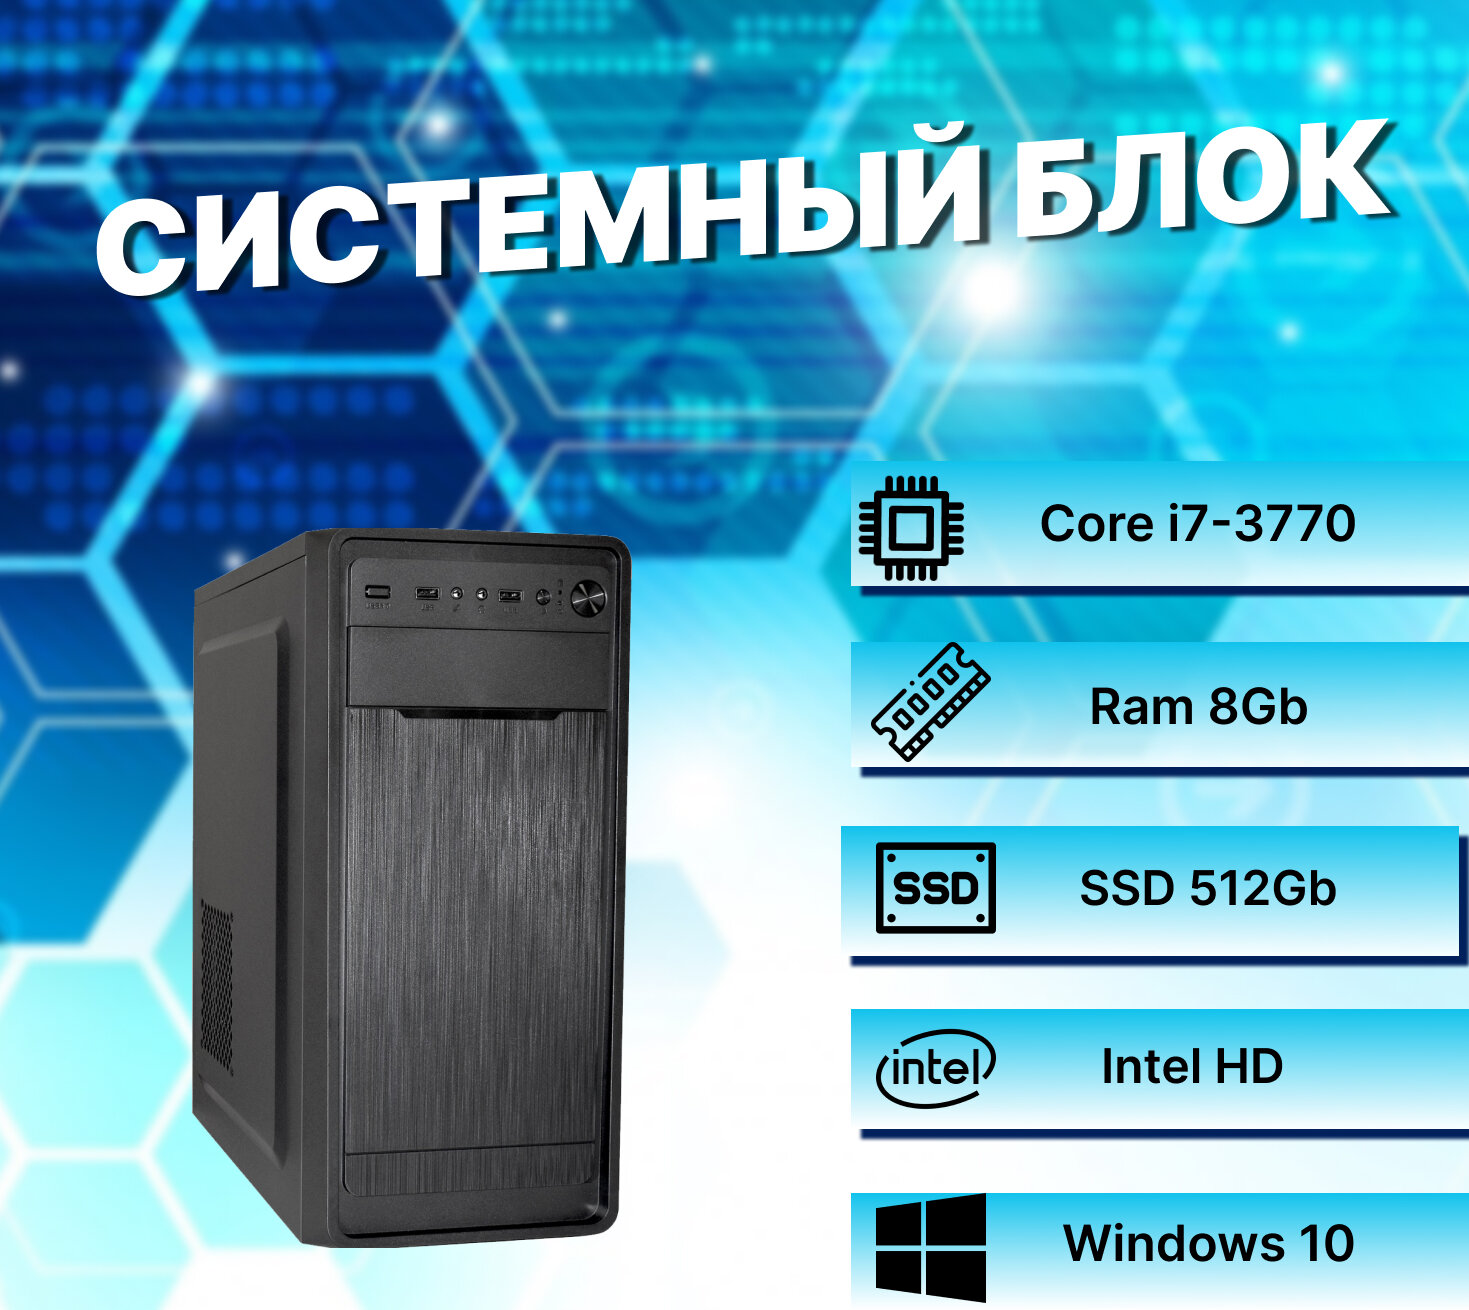 Системный блок Intel Core I7-3770 (3.4ГГц)/ RAM 8Gb/ SSD 512Gb/ Intel HD/ Windows 10 Pro